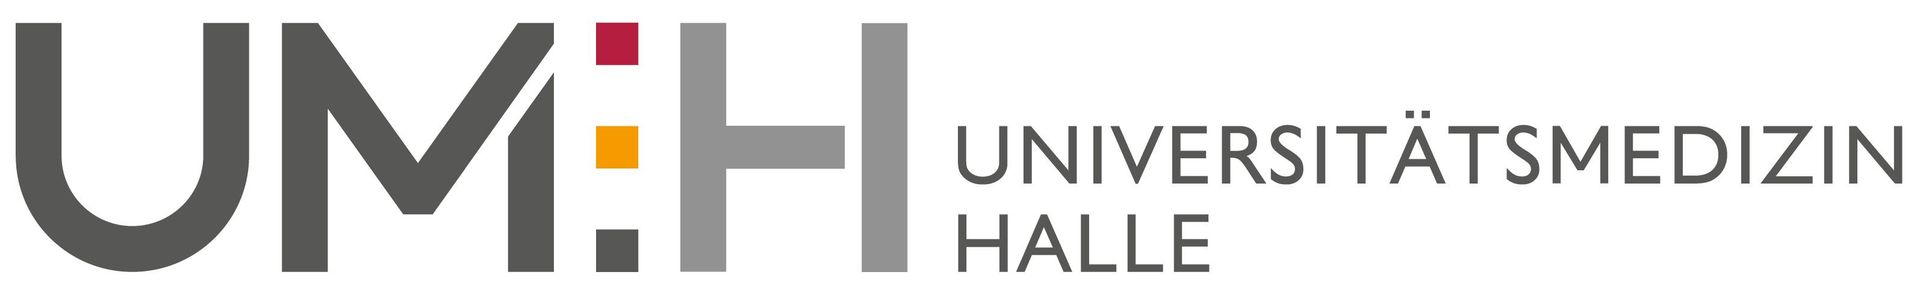 UMH Universitätsmedizin Halle